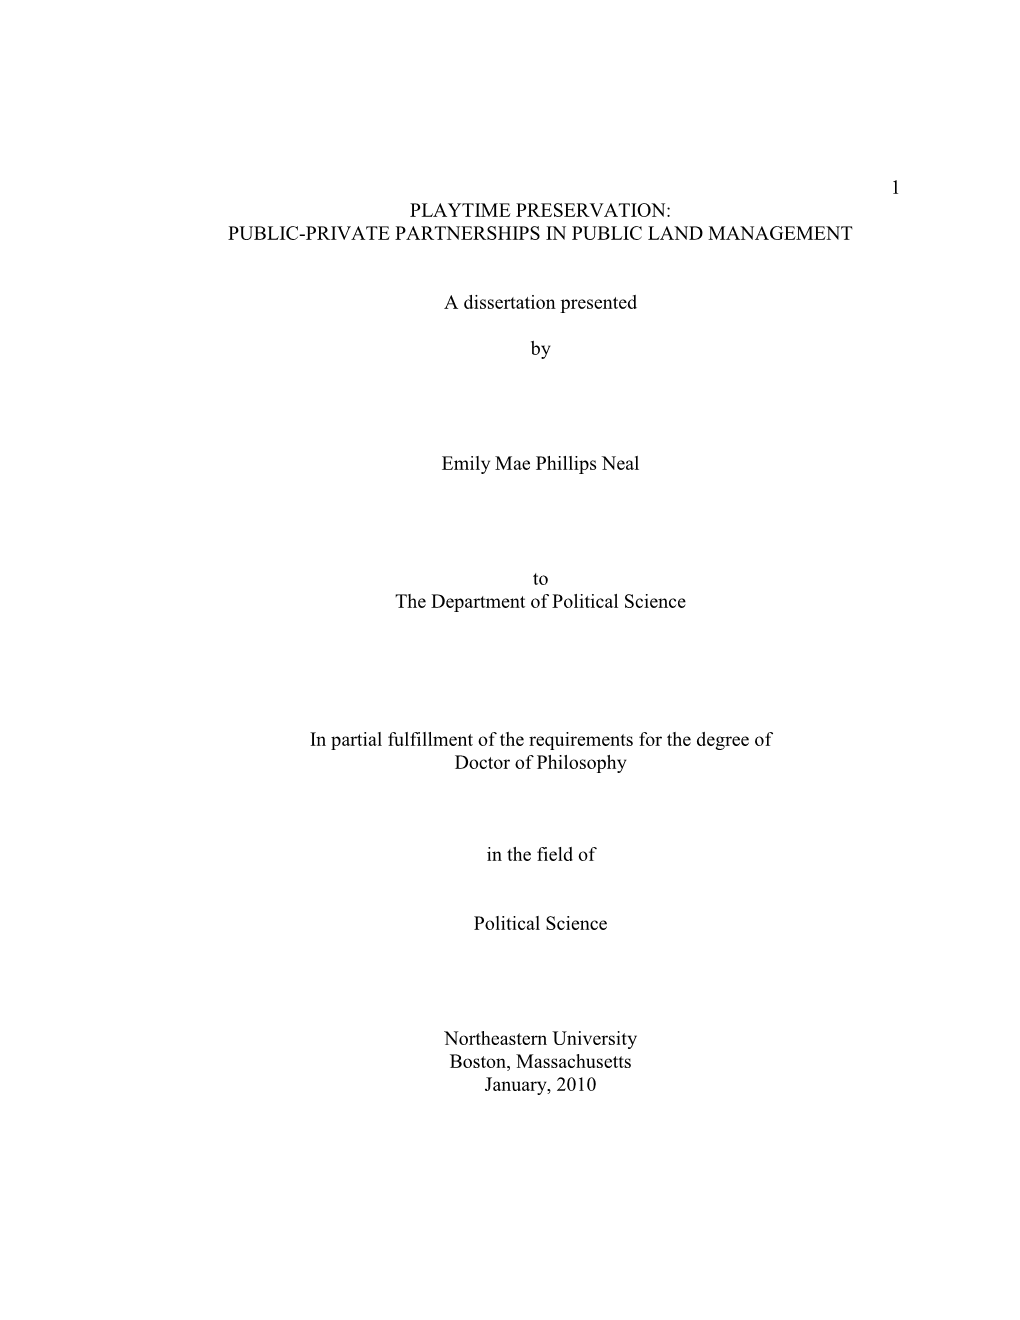 Public-Private Partnerships in Public Land Management